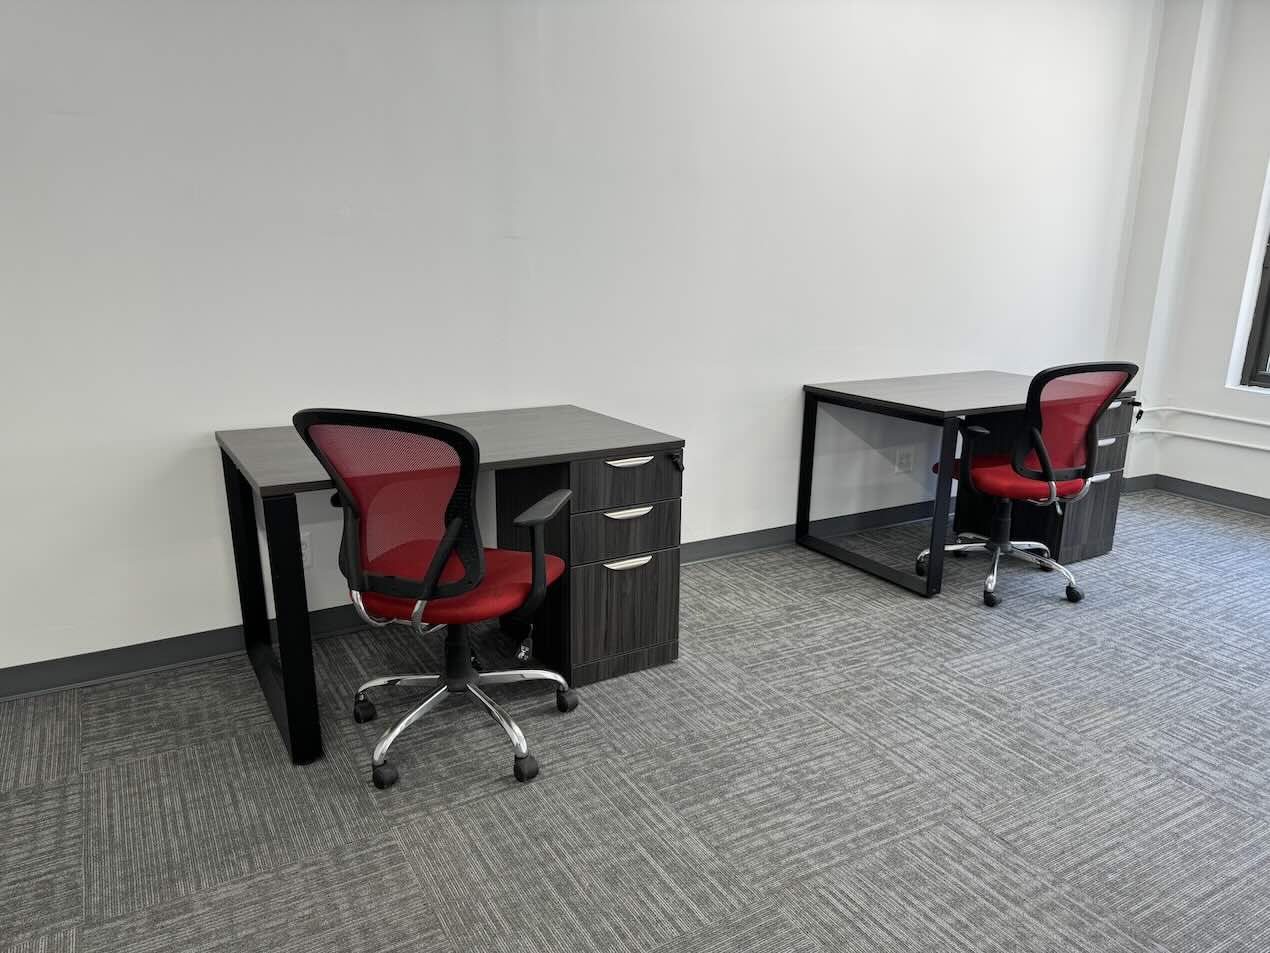 252 West 38th Street Office Space - Office Desks